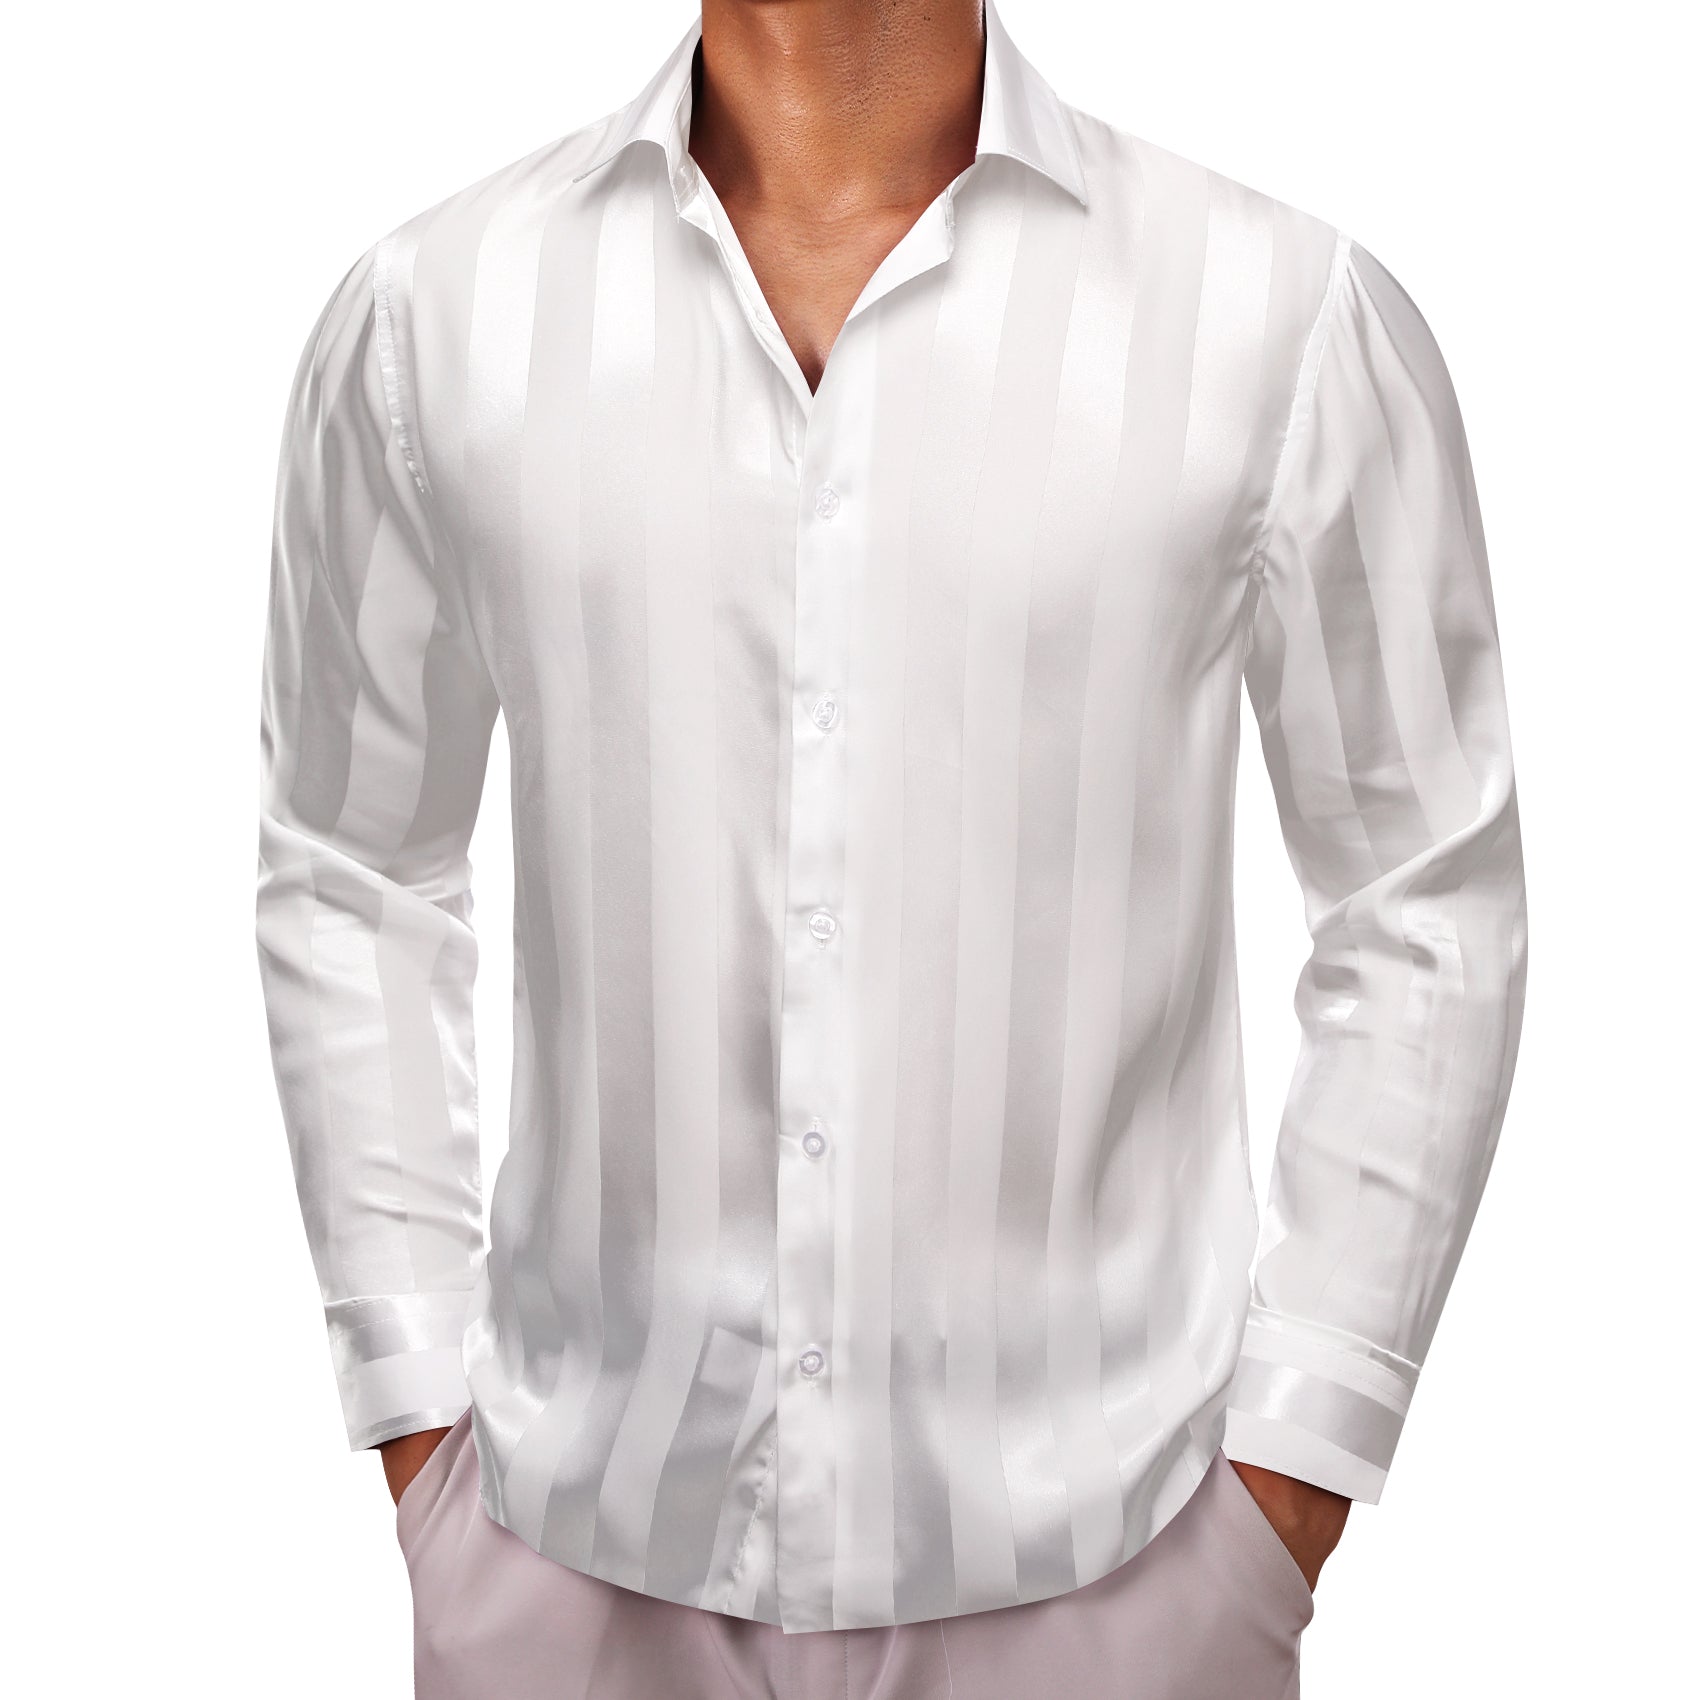 Barry.wang White Striped Silk Men's Shirt